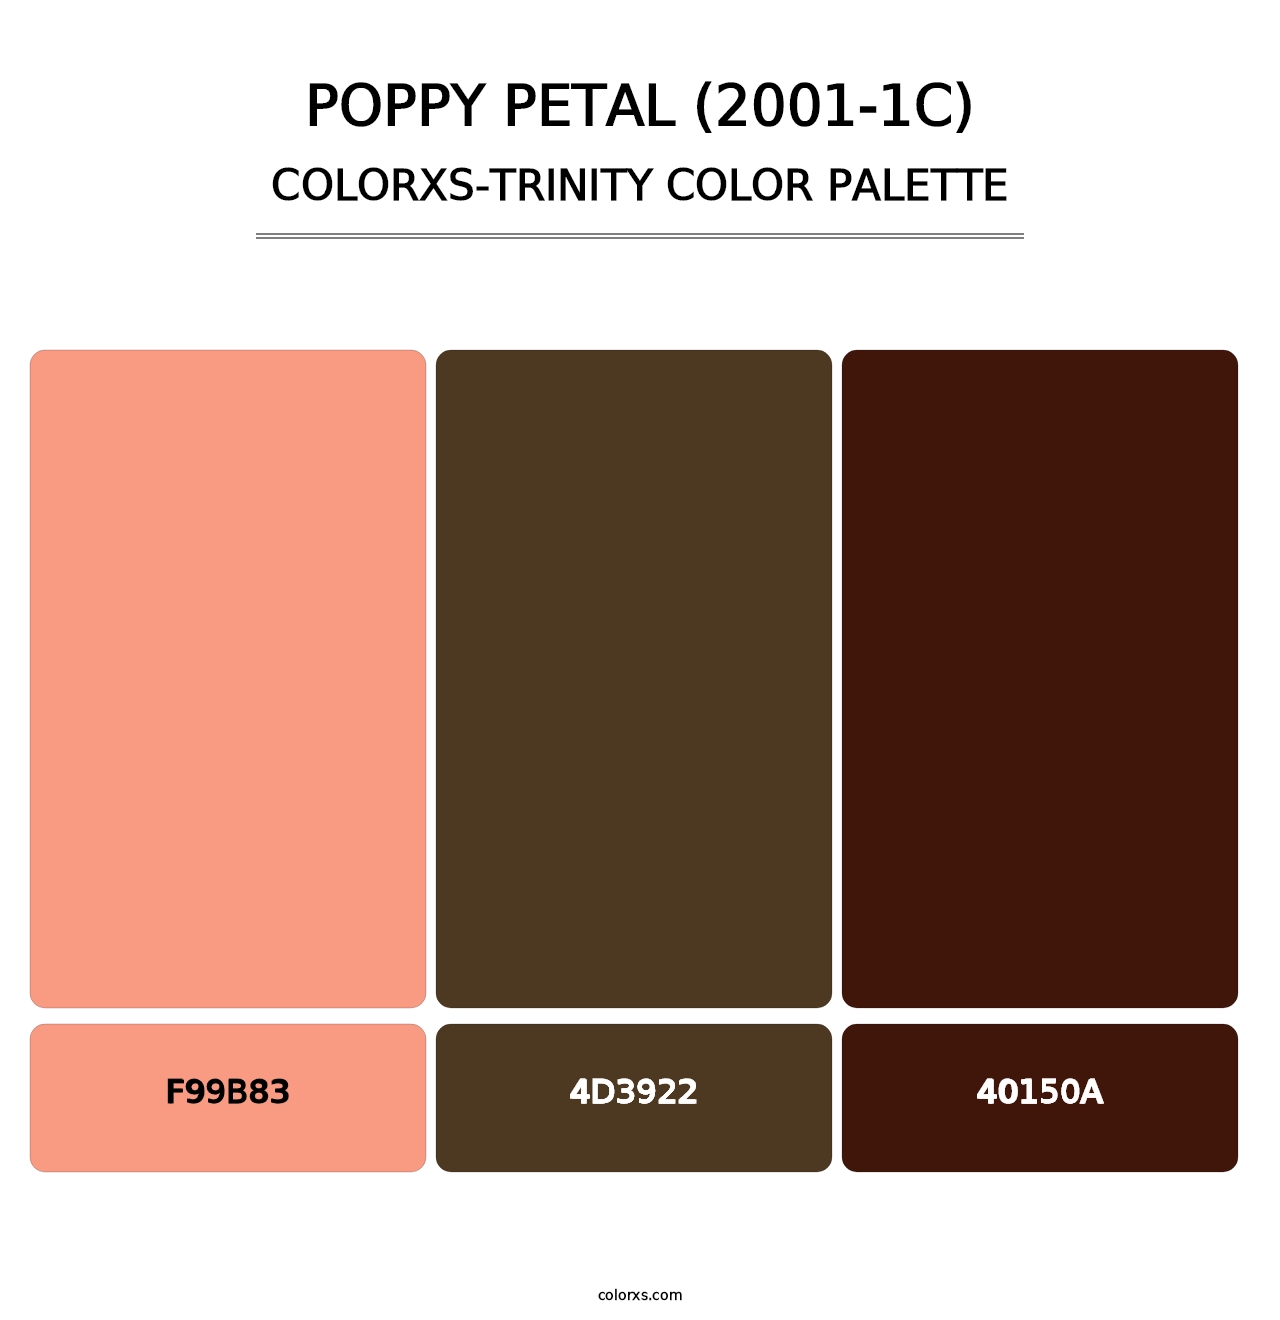 Poppy Petal (2001-1C) - Colorxs Trinity Palette